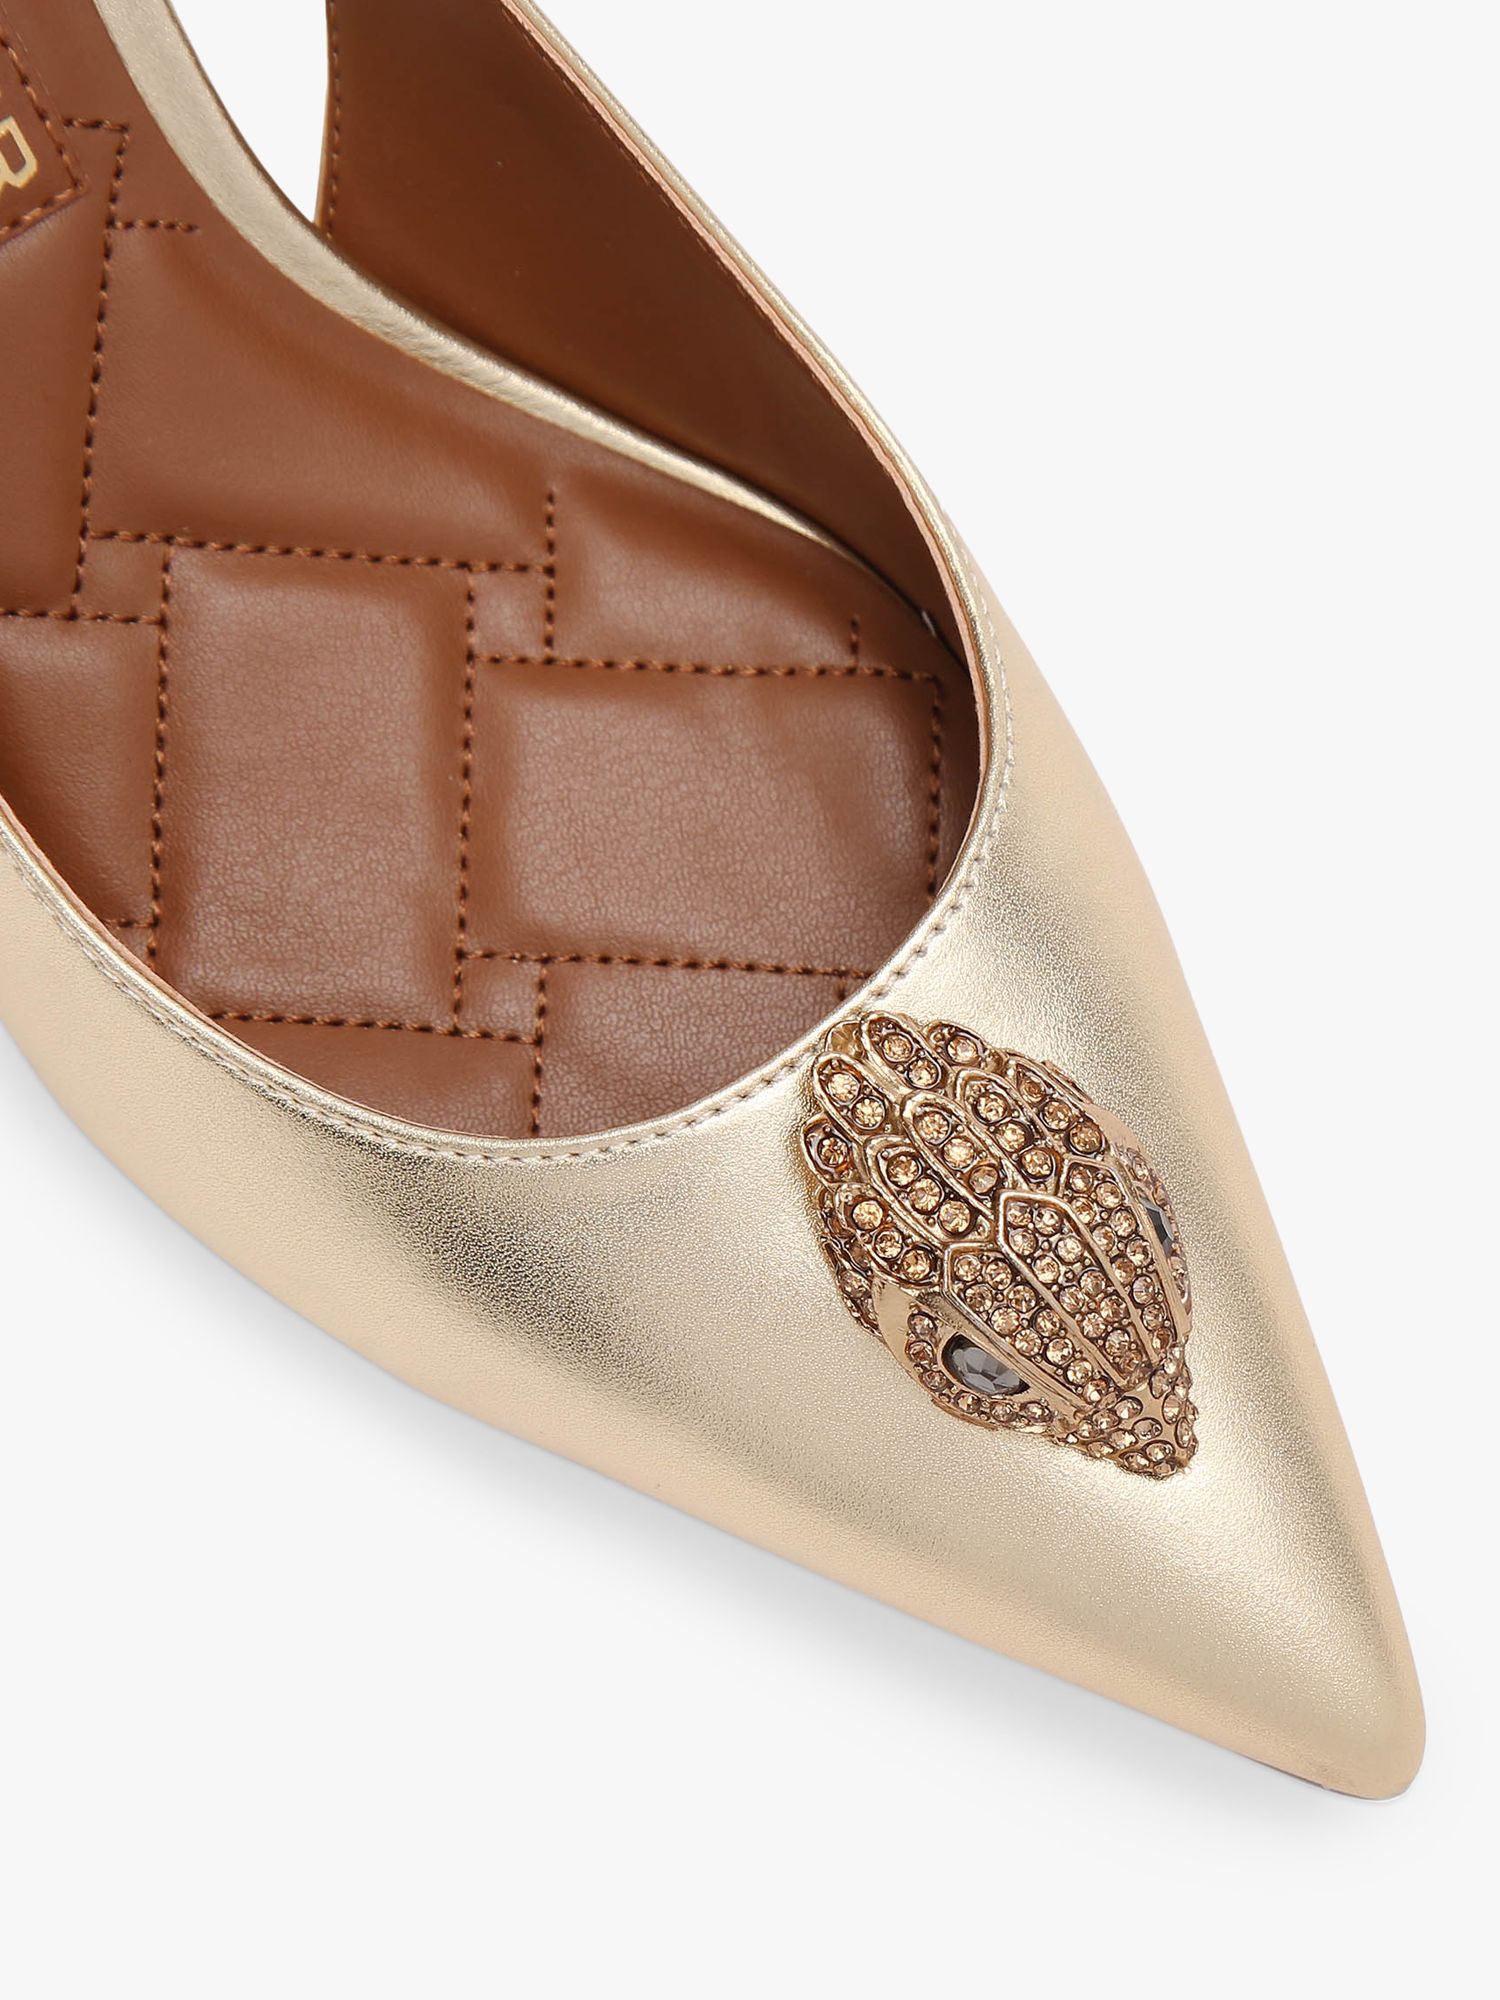 Kurt Geiger London Belgravia Leather Slingback Court Shoes, Gold, 3